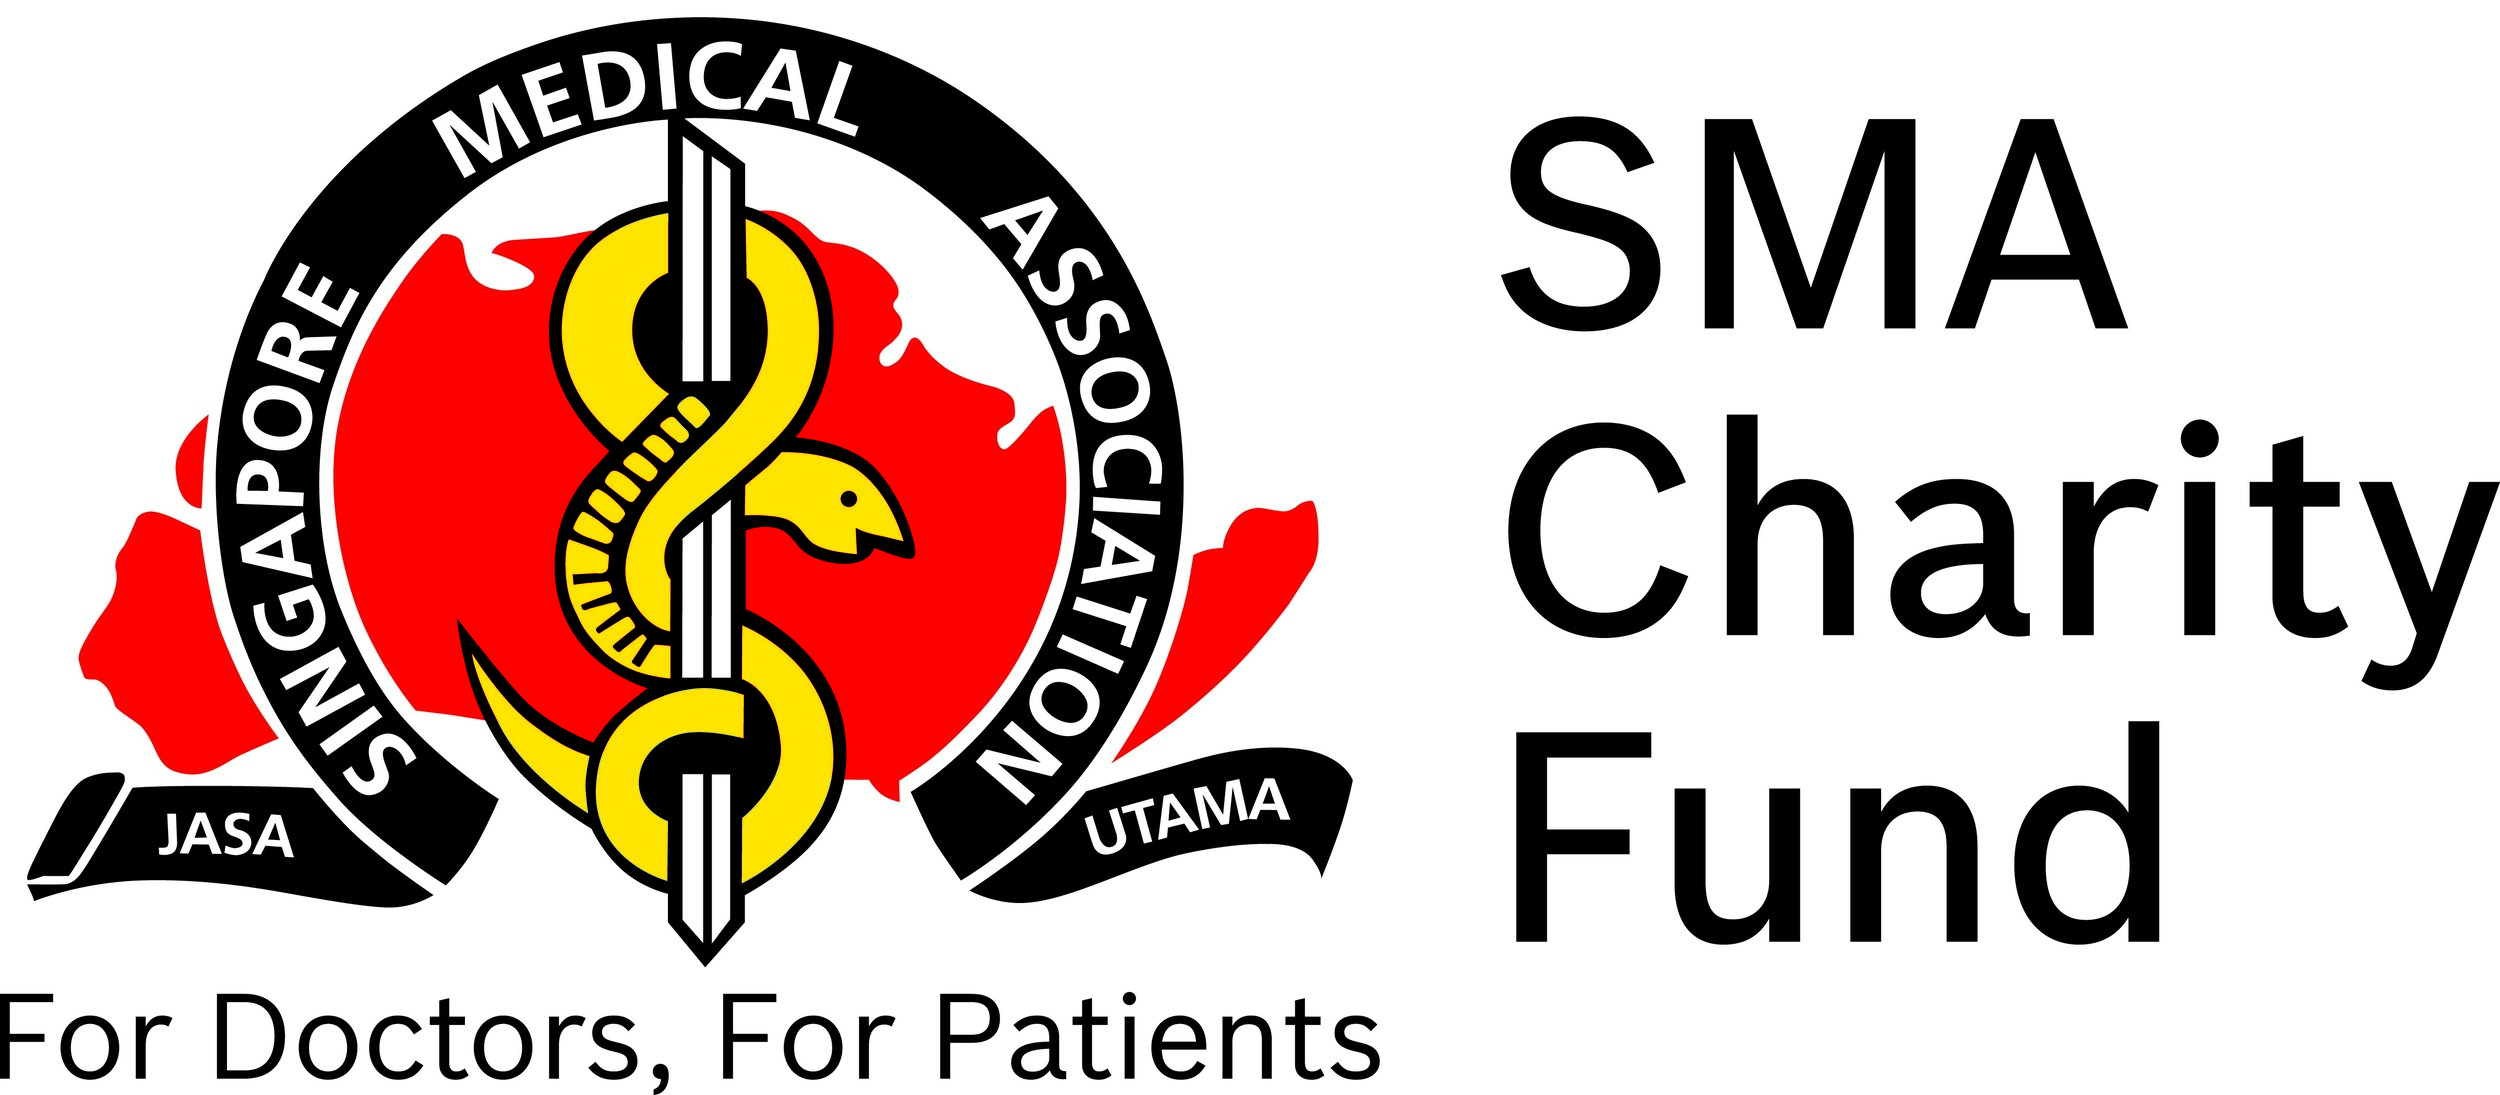 SMA Charity Fund Logo.jpg